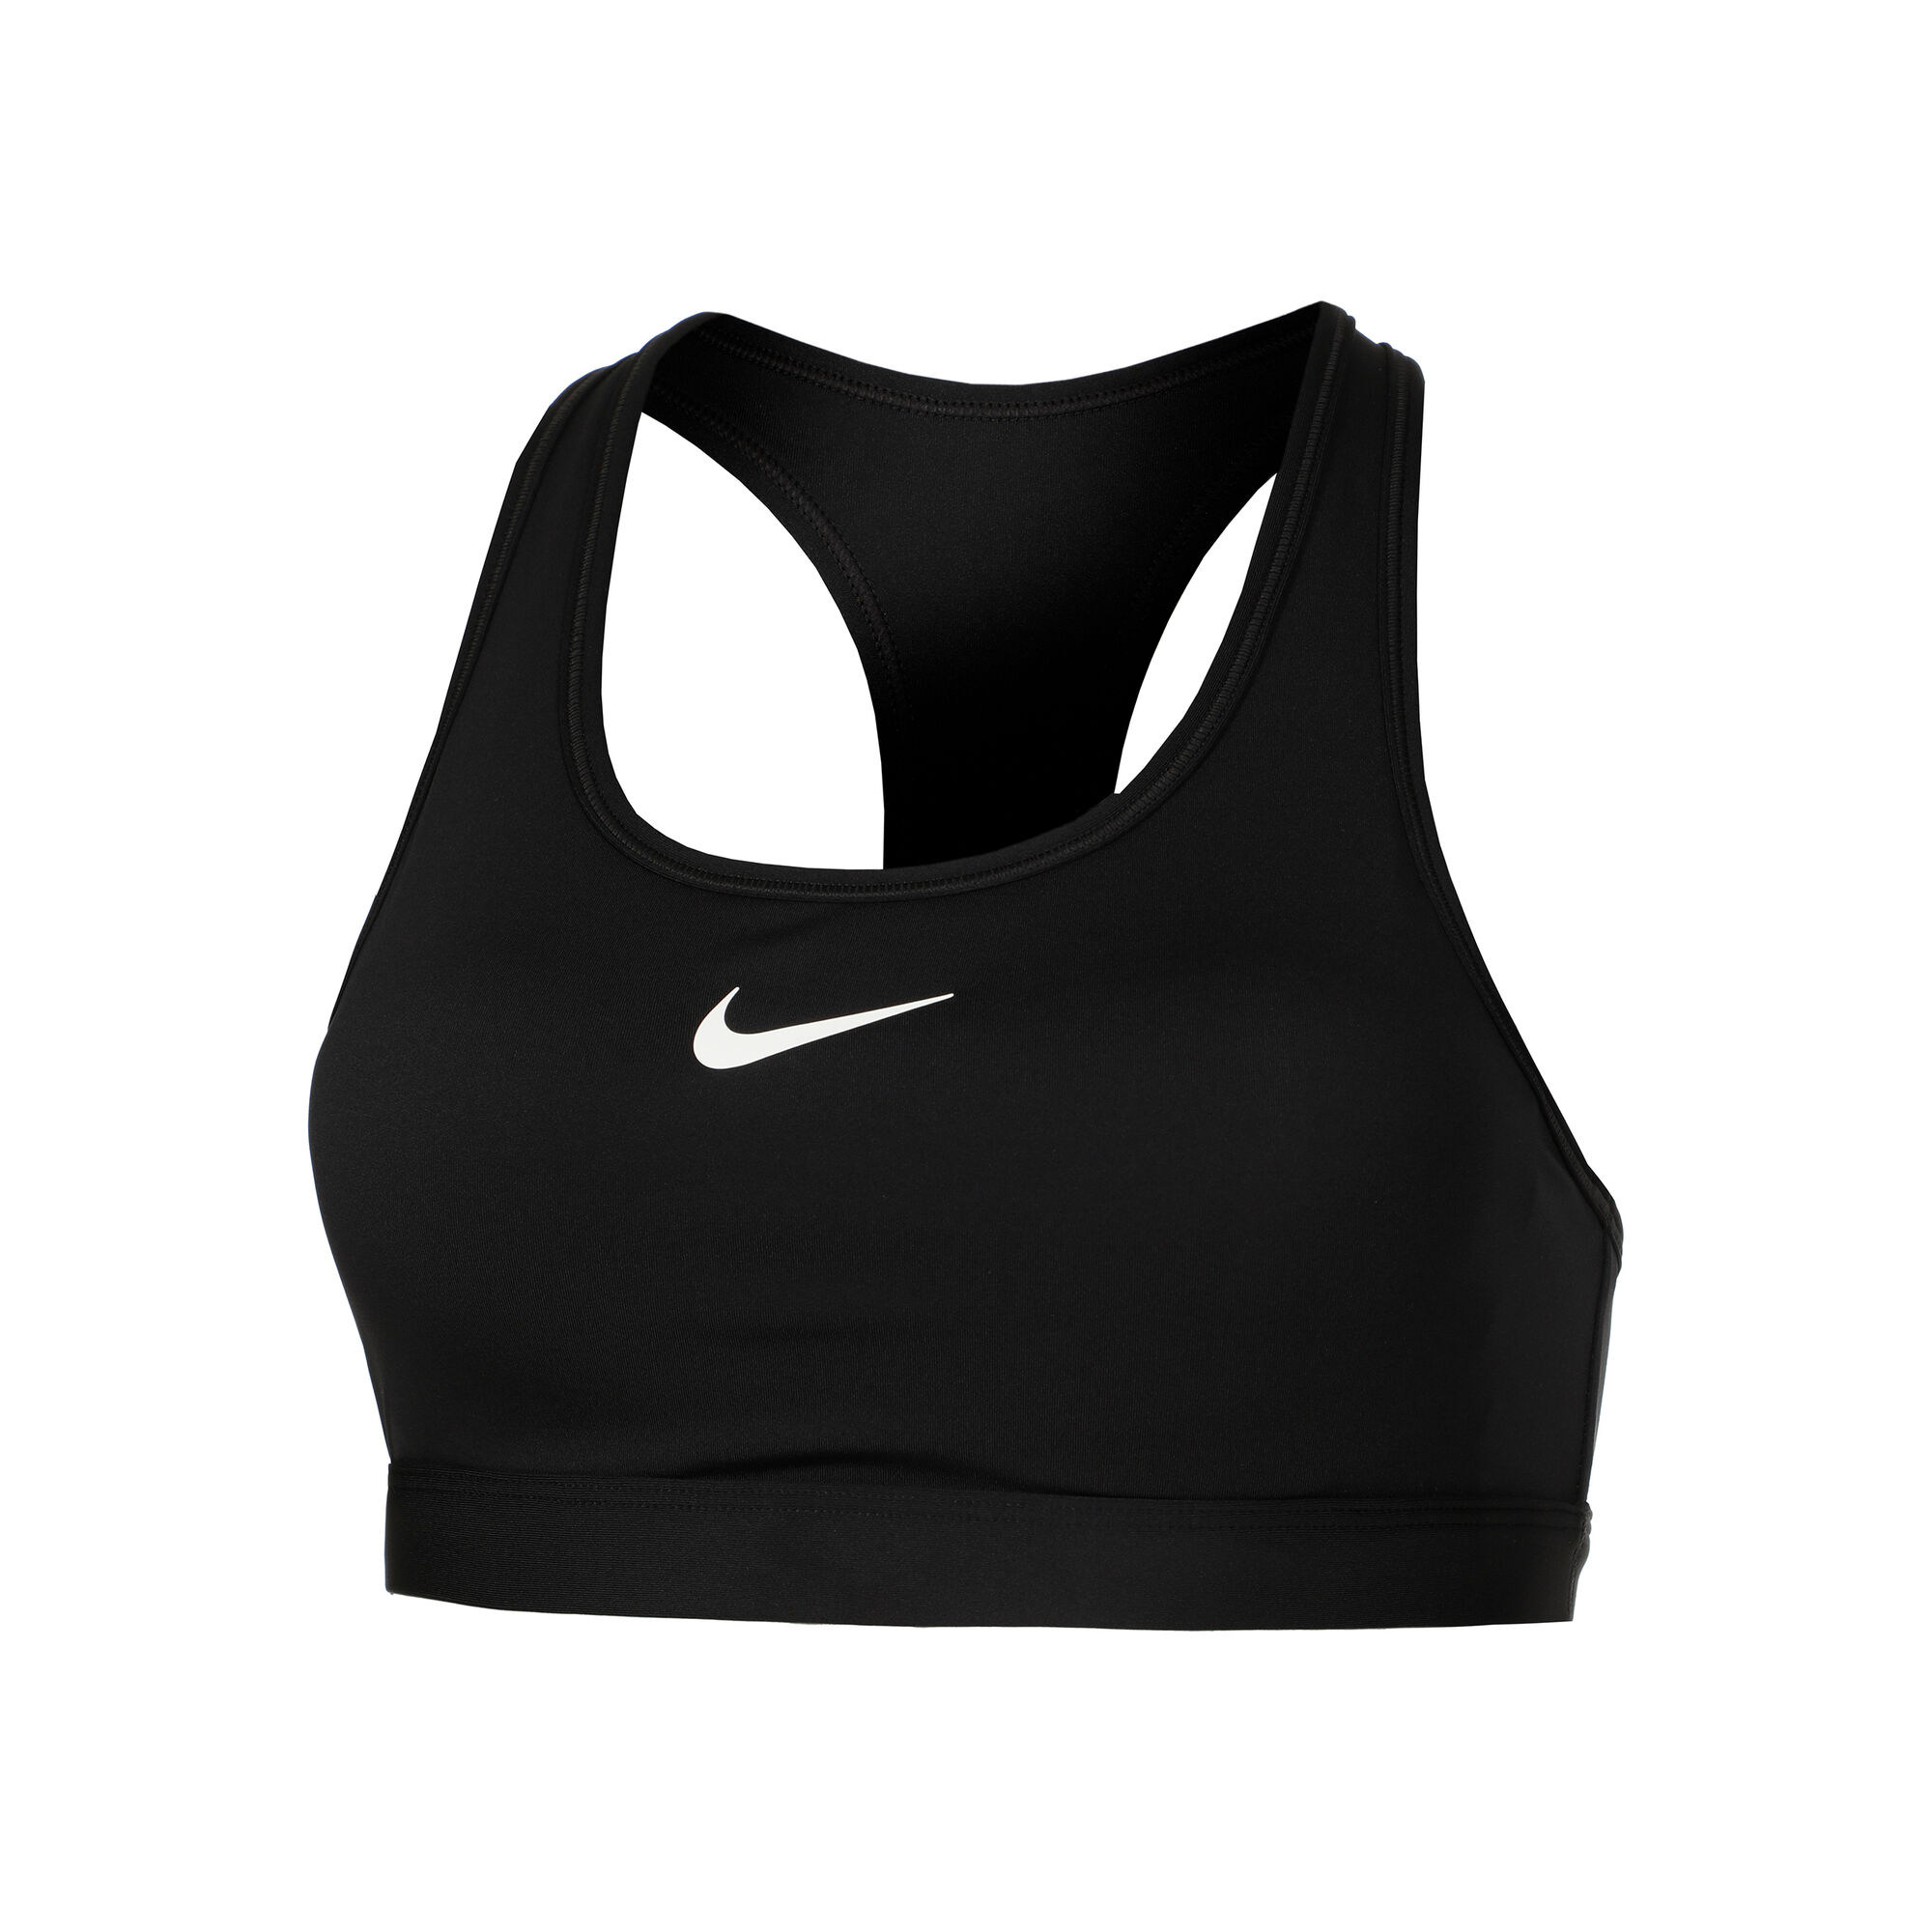 Buy Nike Swoosh Medium Sports Bras Women Black online